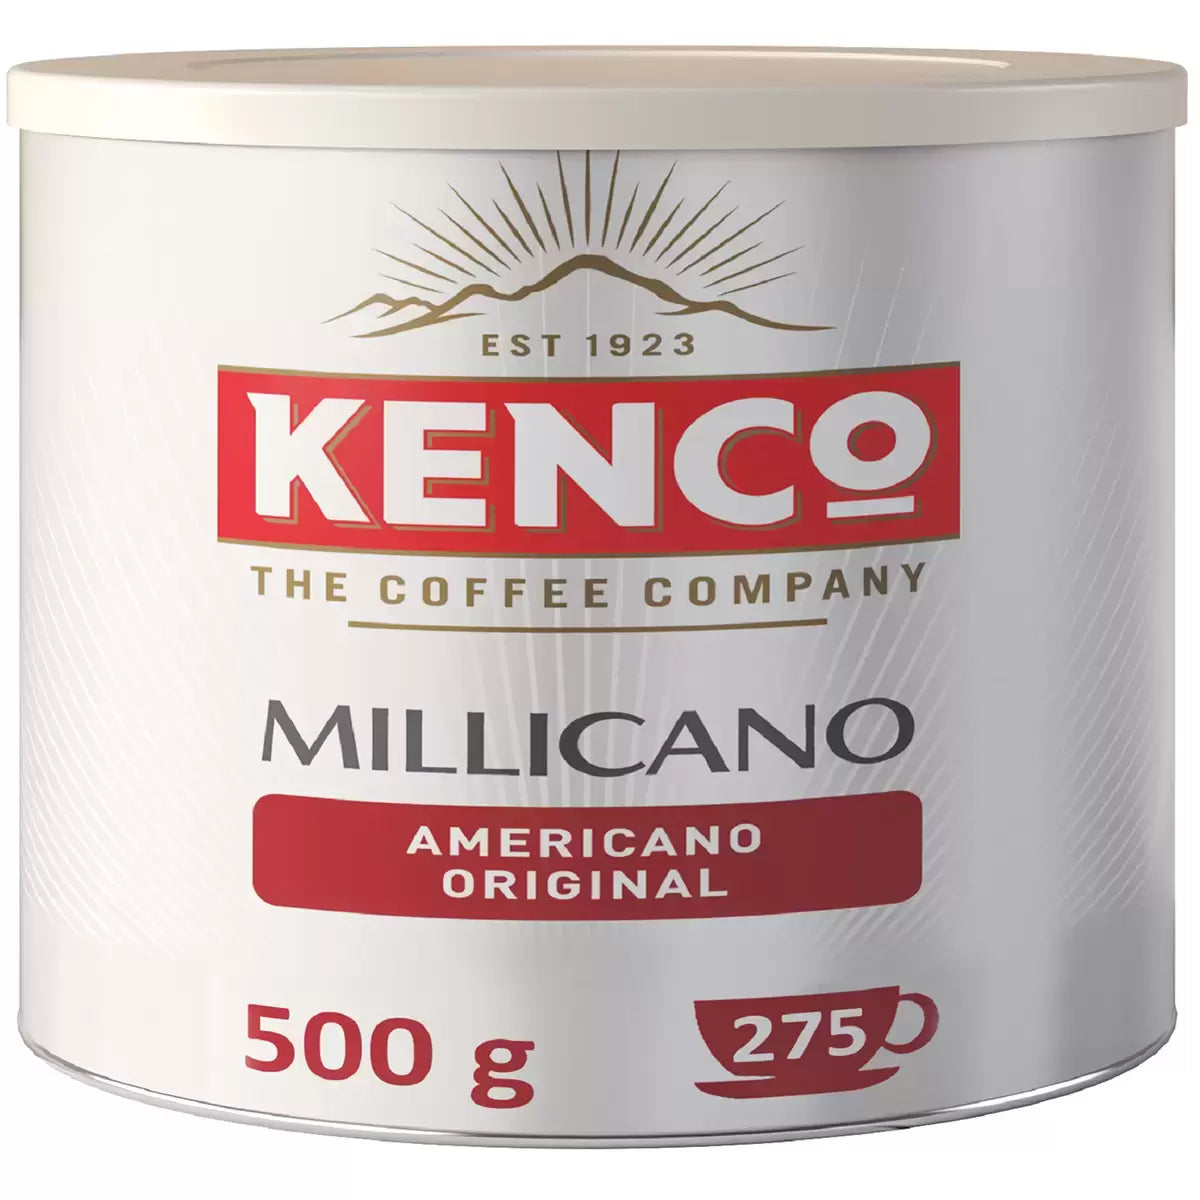 Kenco Millicano Americano Original - 500g